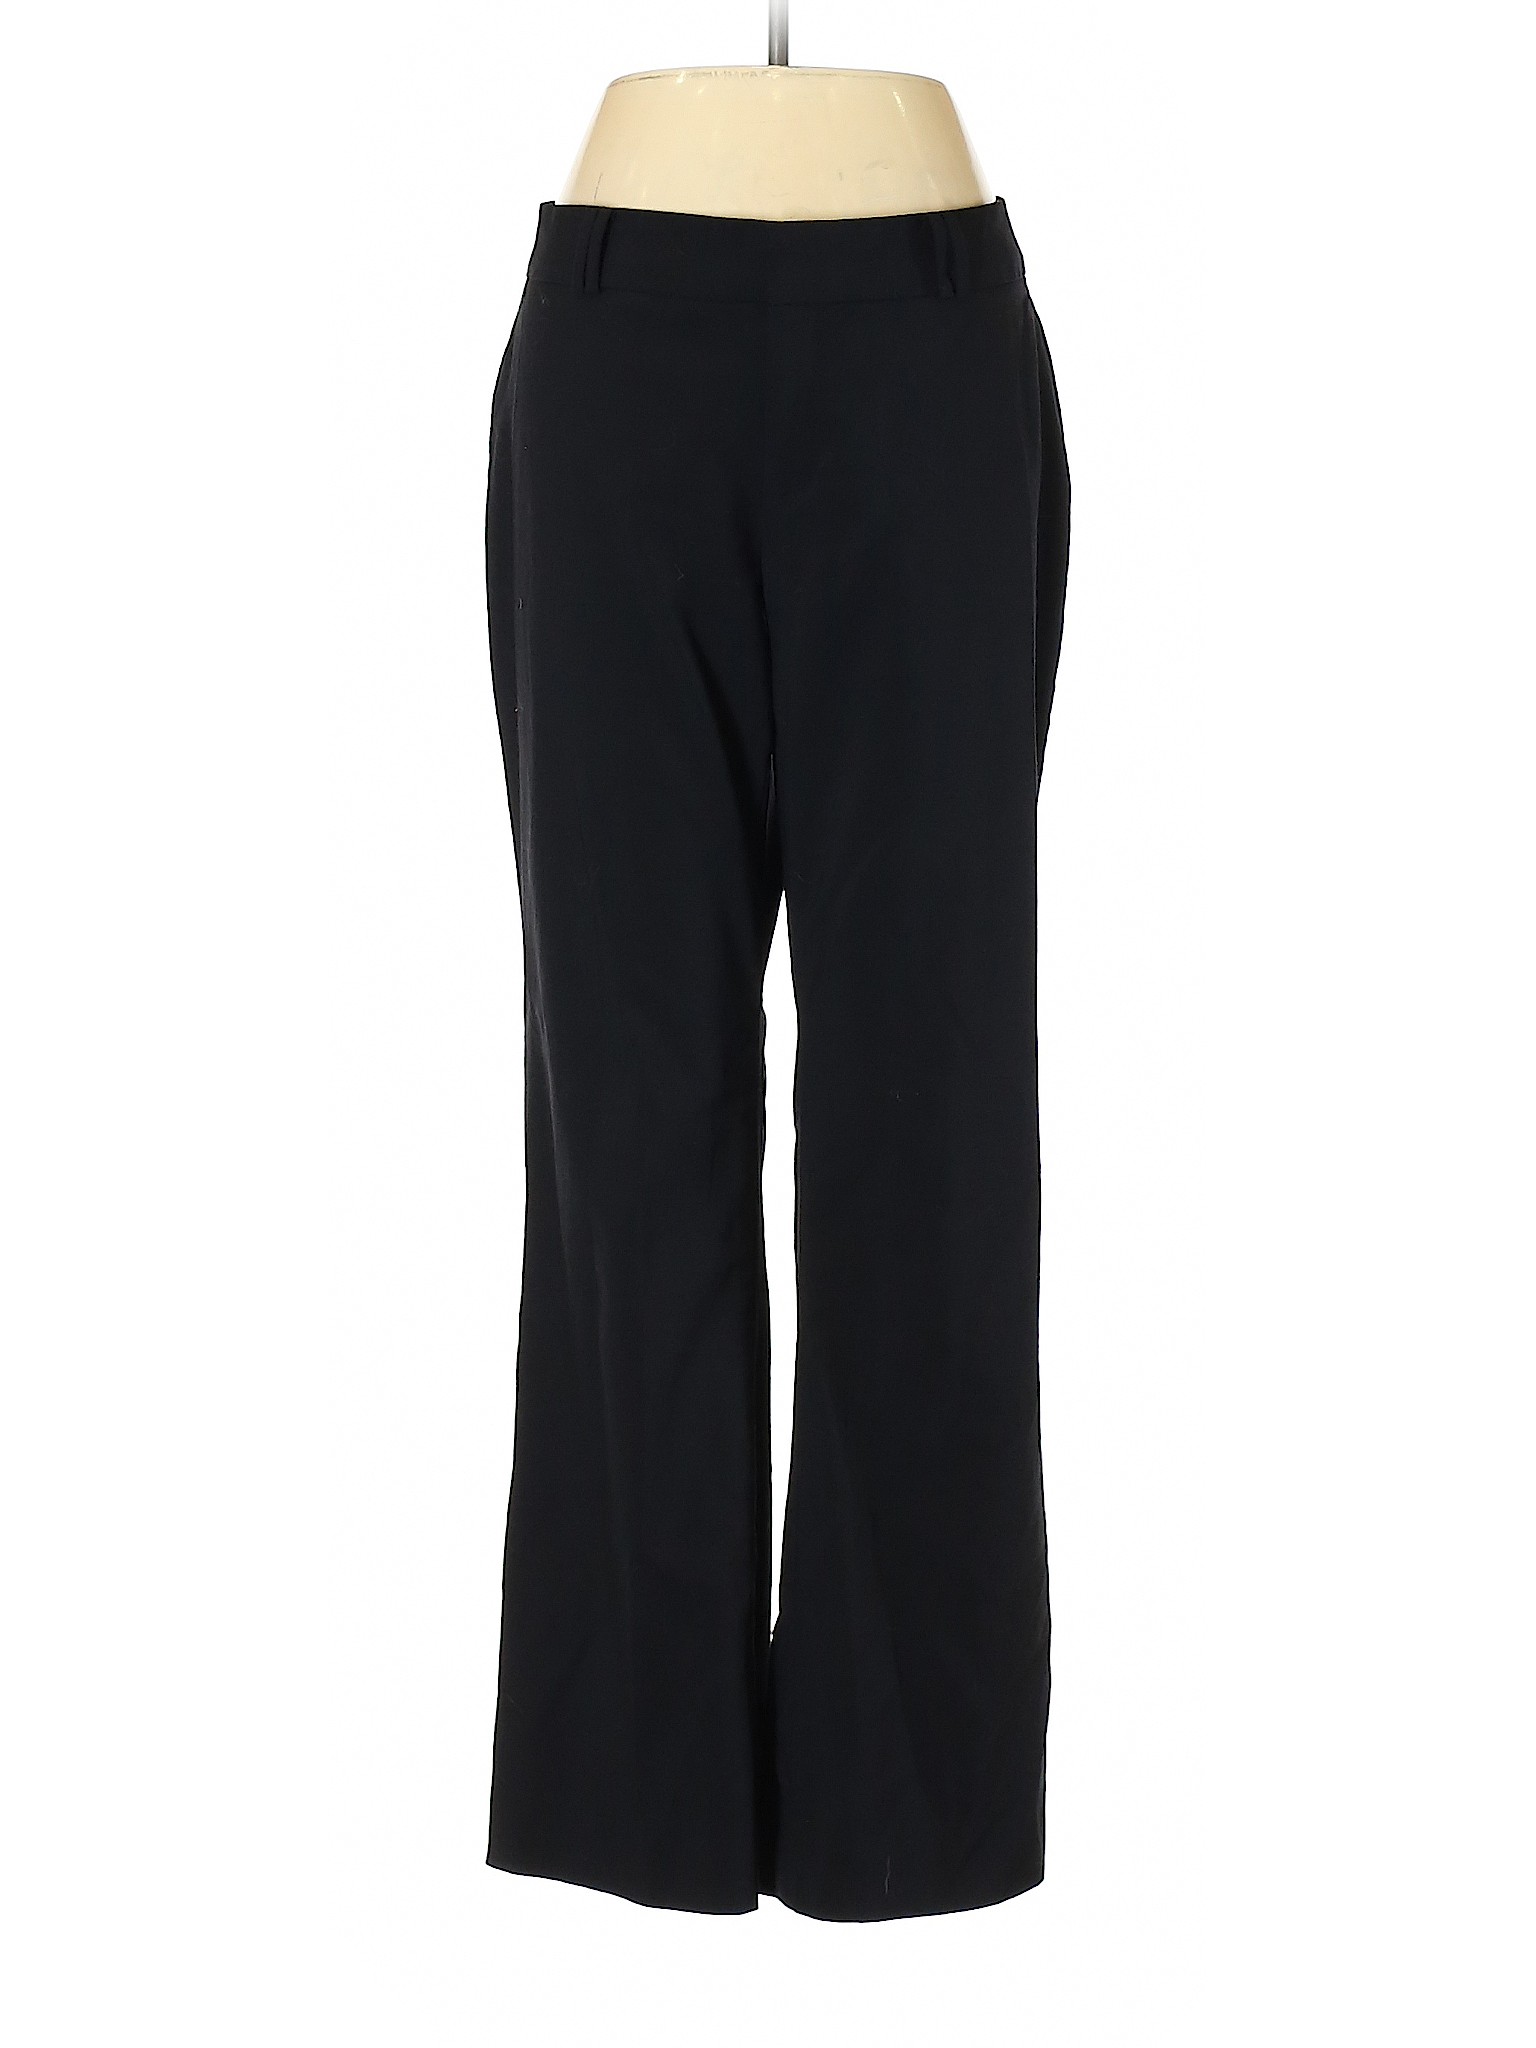 Banana Republic Women Black Wool Pants 6 Petites | eBay